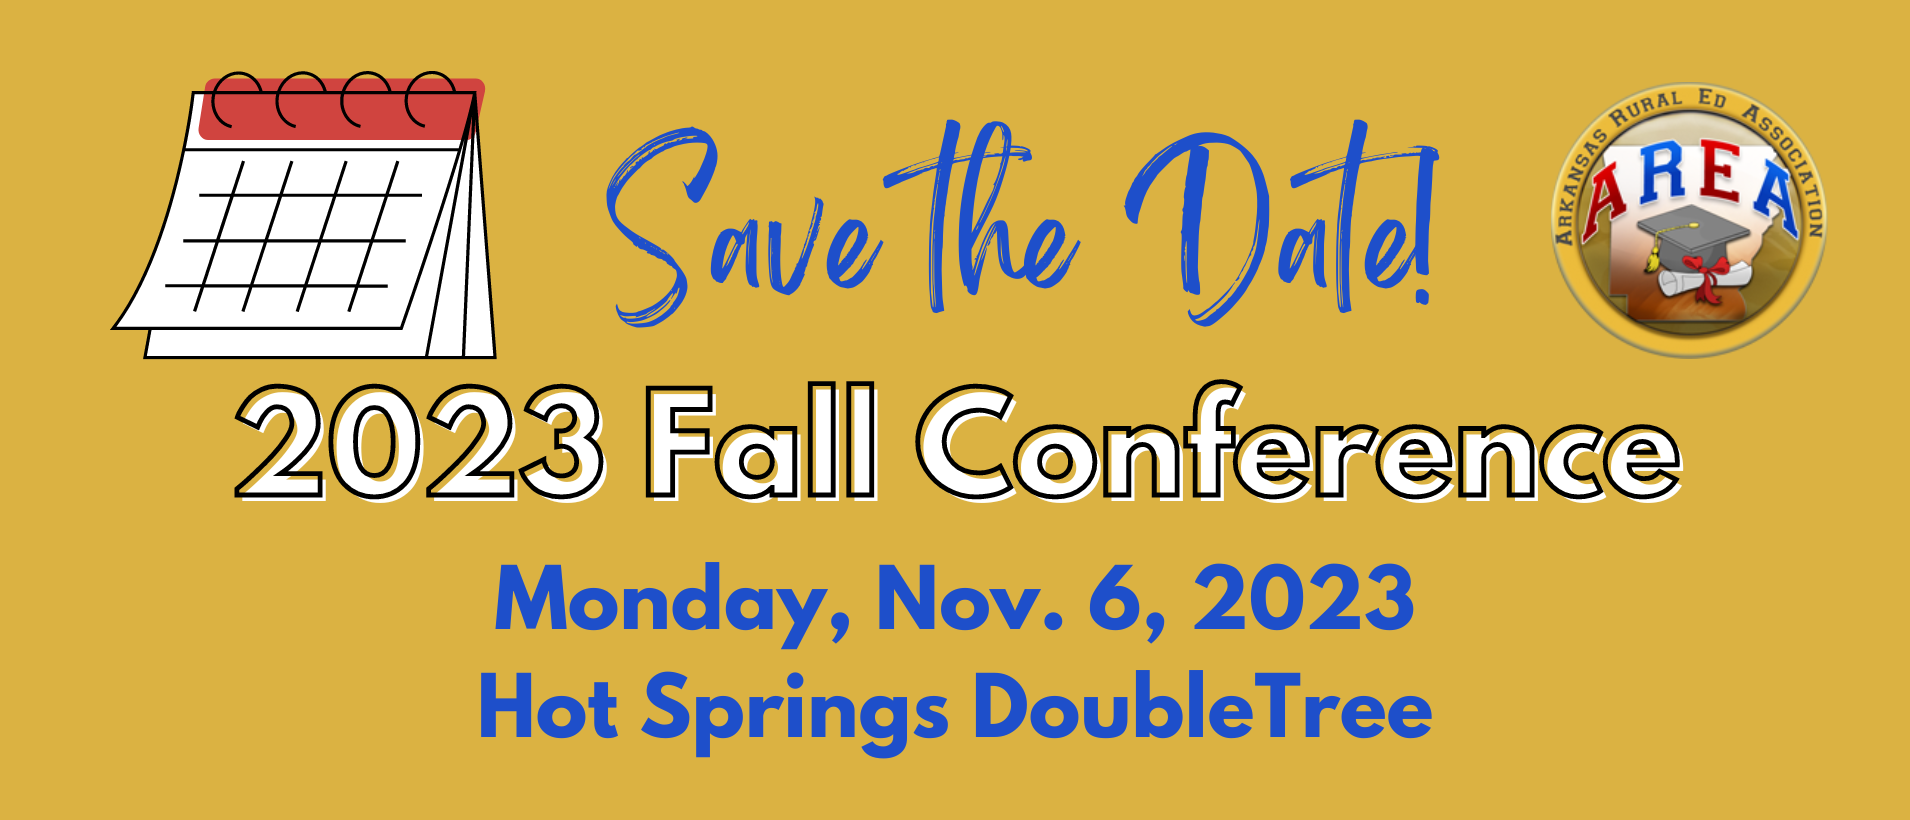 Fall Conference Nov. 6